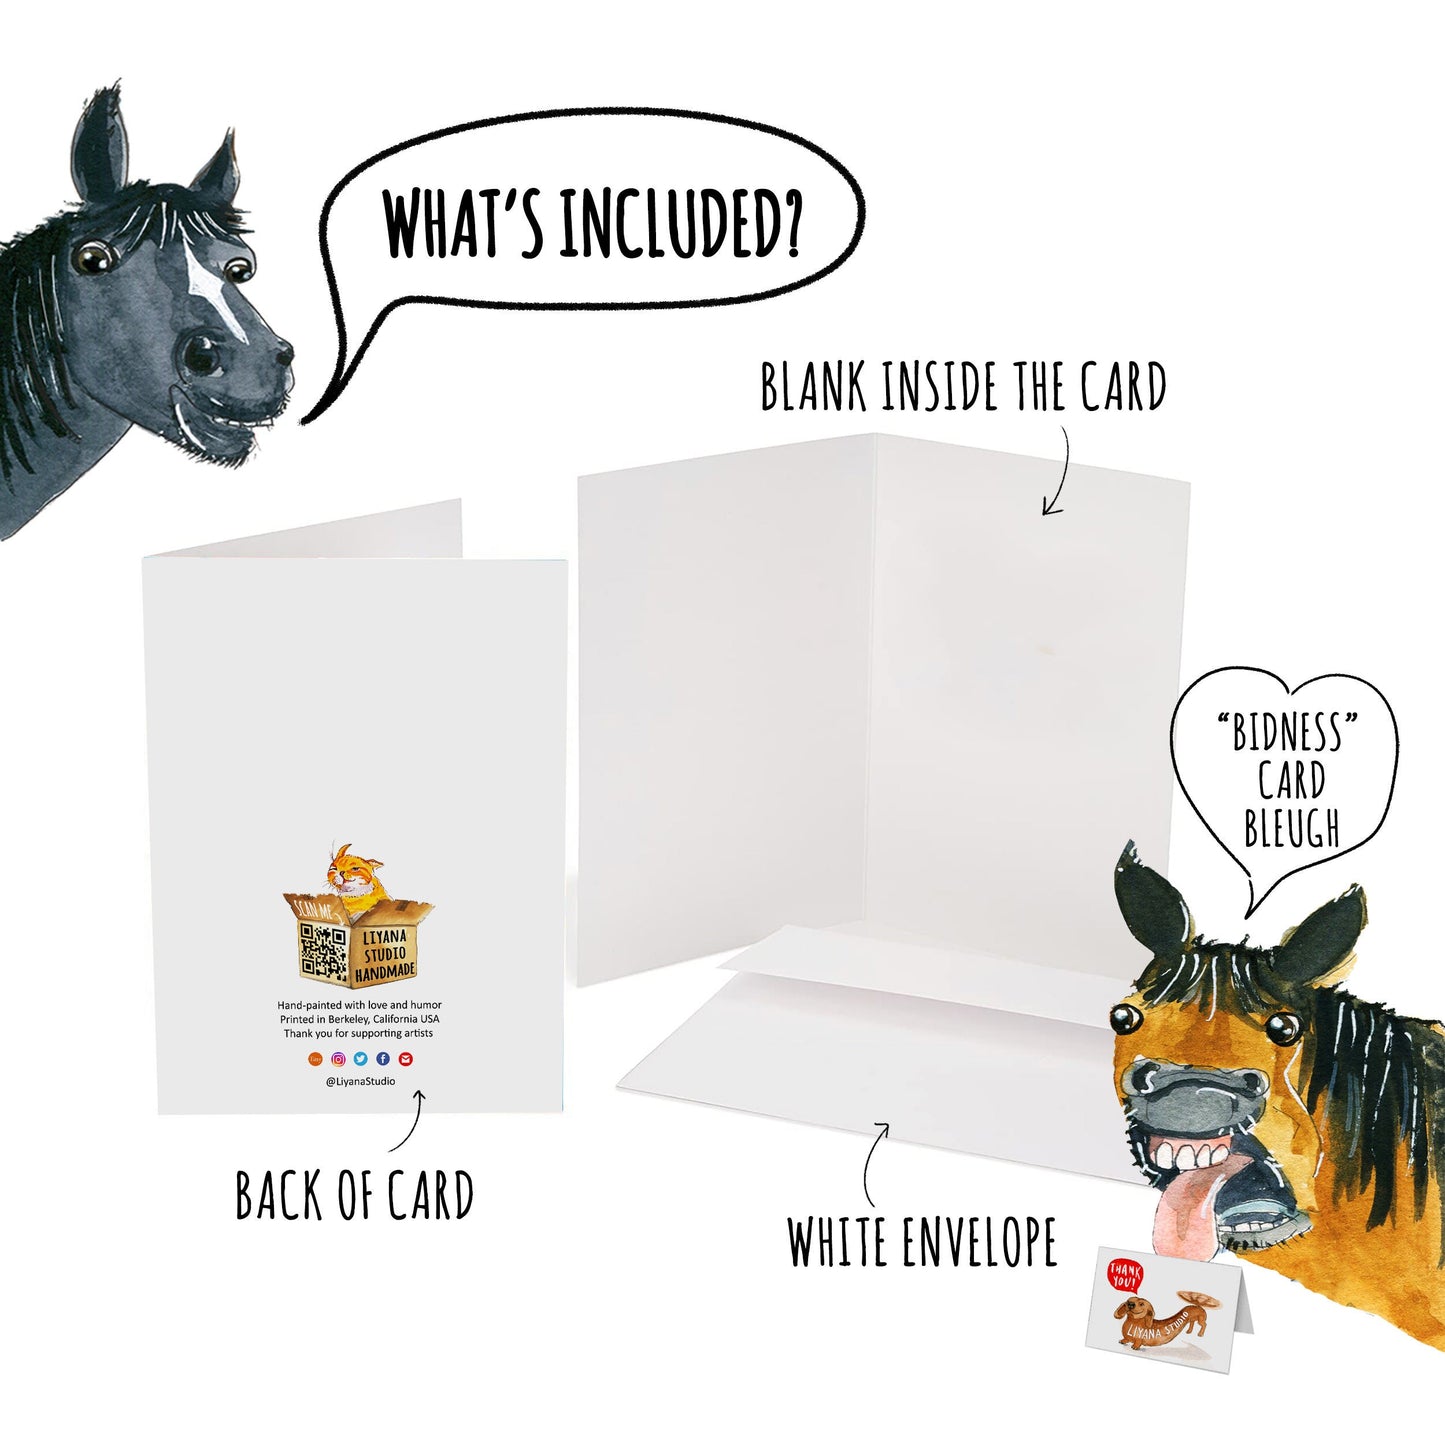 Funny Christmas Cards - Naughty Black Cat Mistletoe - Obligated Holiday Card